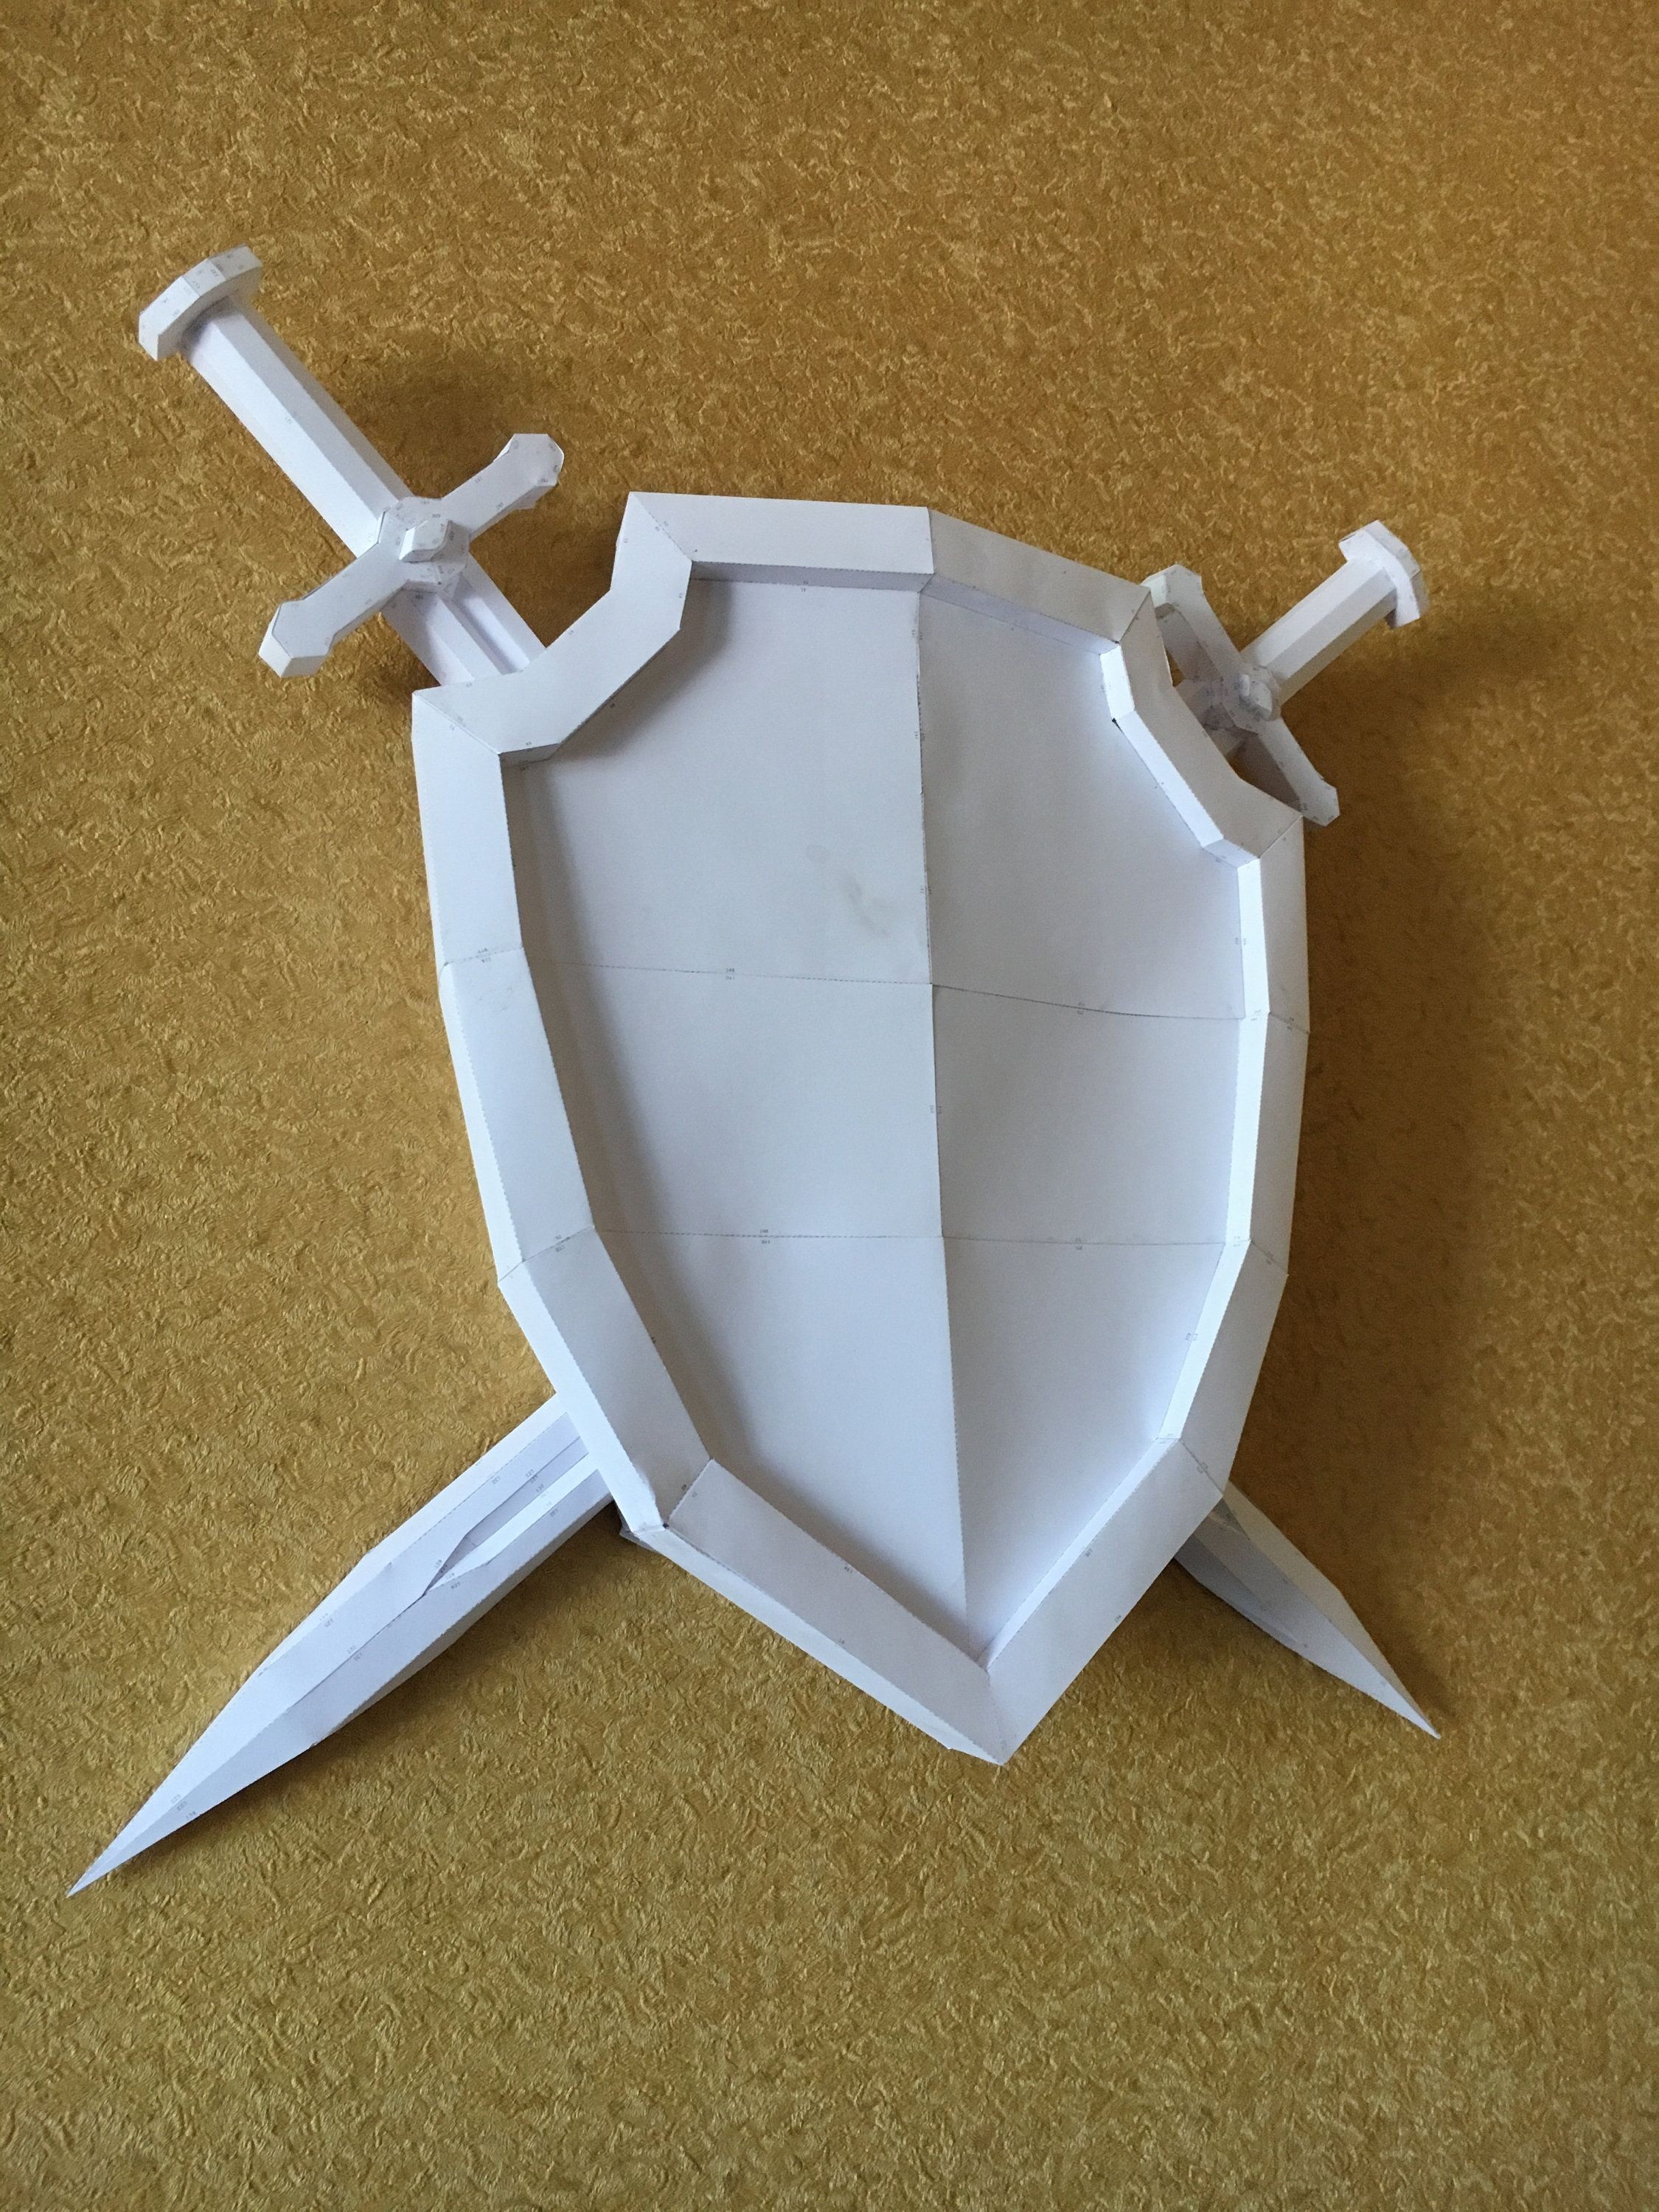 Android Papercraft Sword Shield Diy Papercraft Model ÐÑÐ¼Ð°Ð¶Ð½ÑÐµ Ð¸Ð·Ð´ÐµÐ Ð¸Ñ